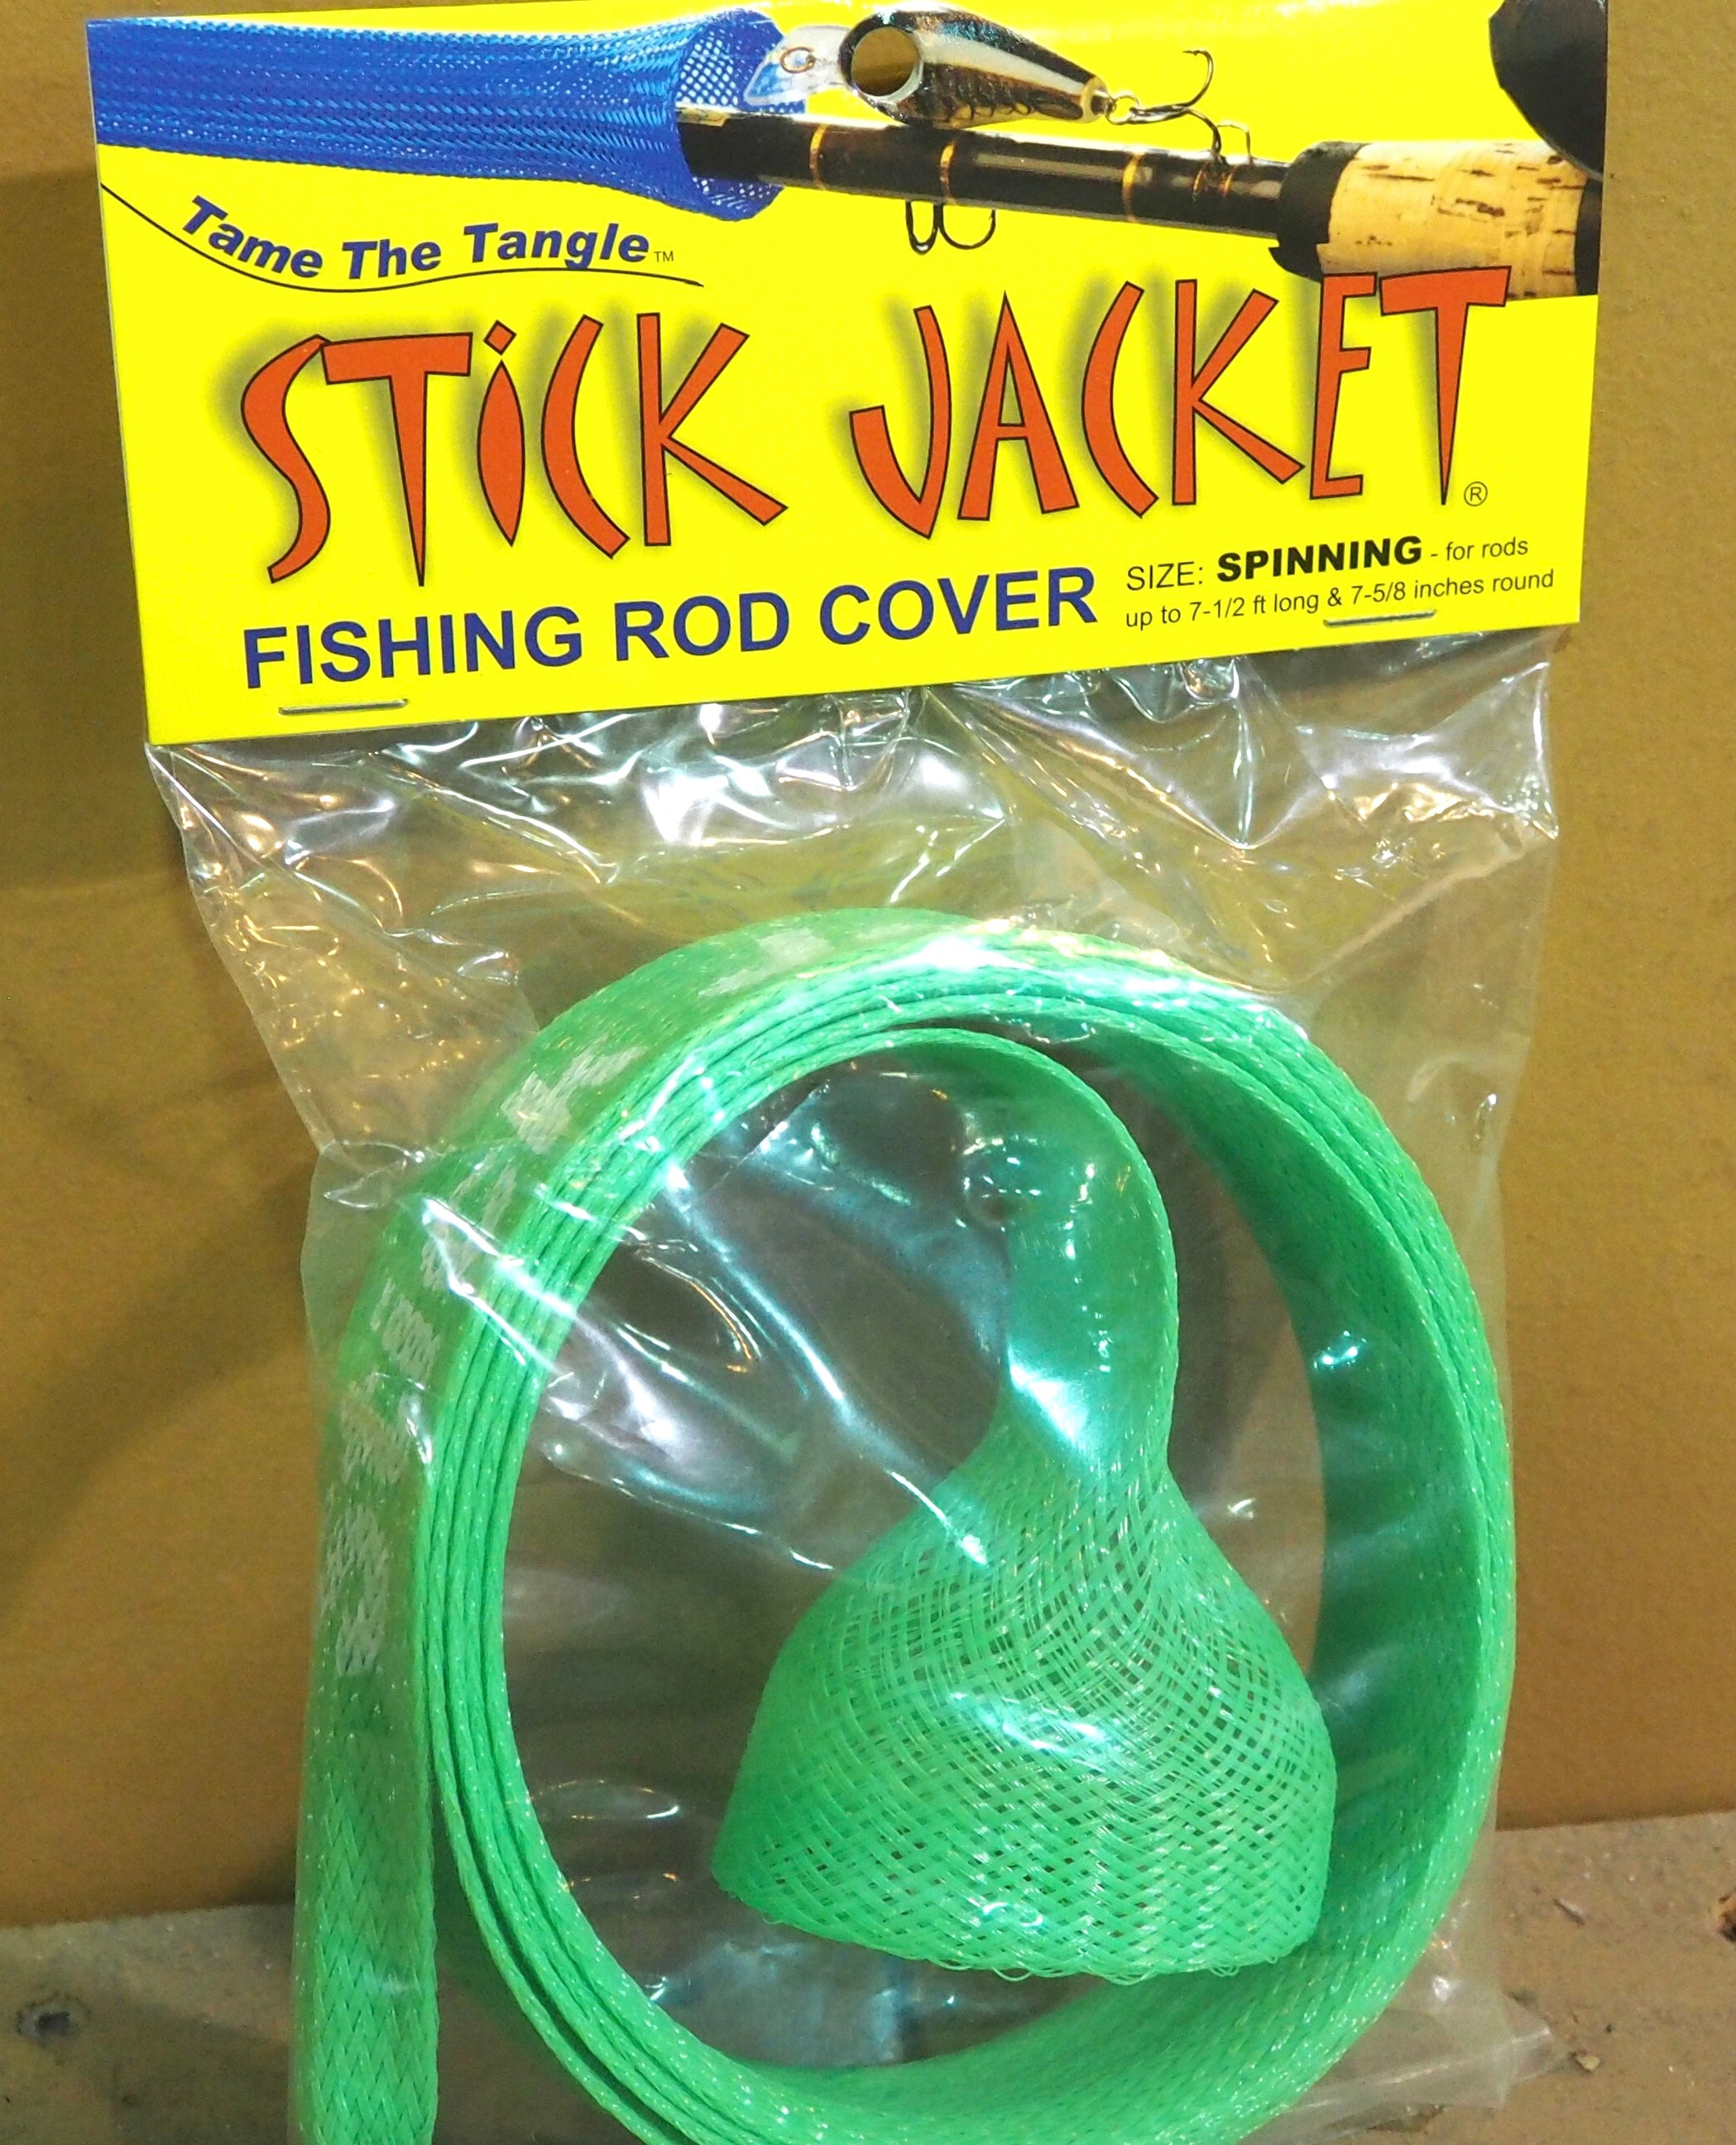 Stick Jacket Fishing Rod Covers Spinning Size